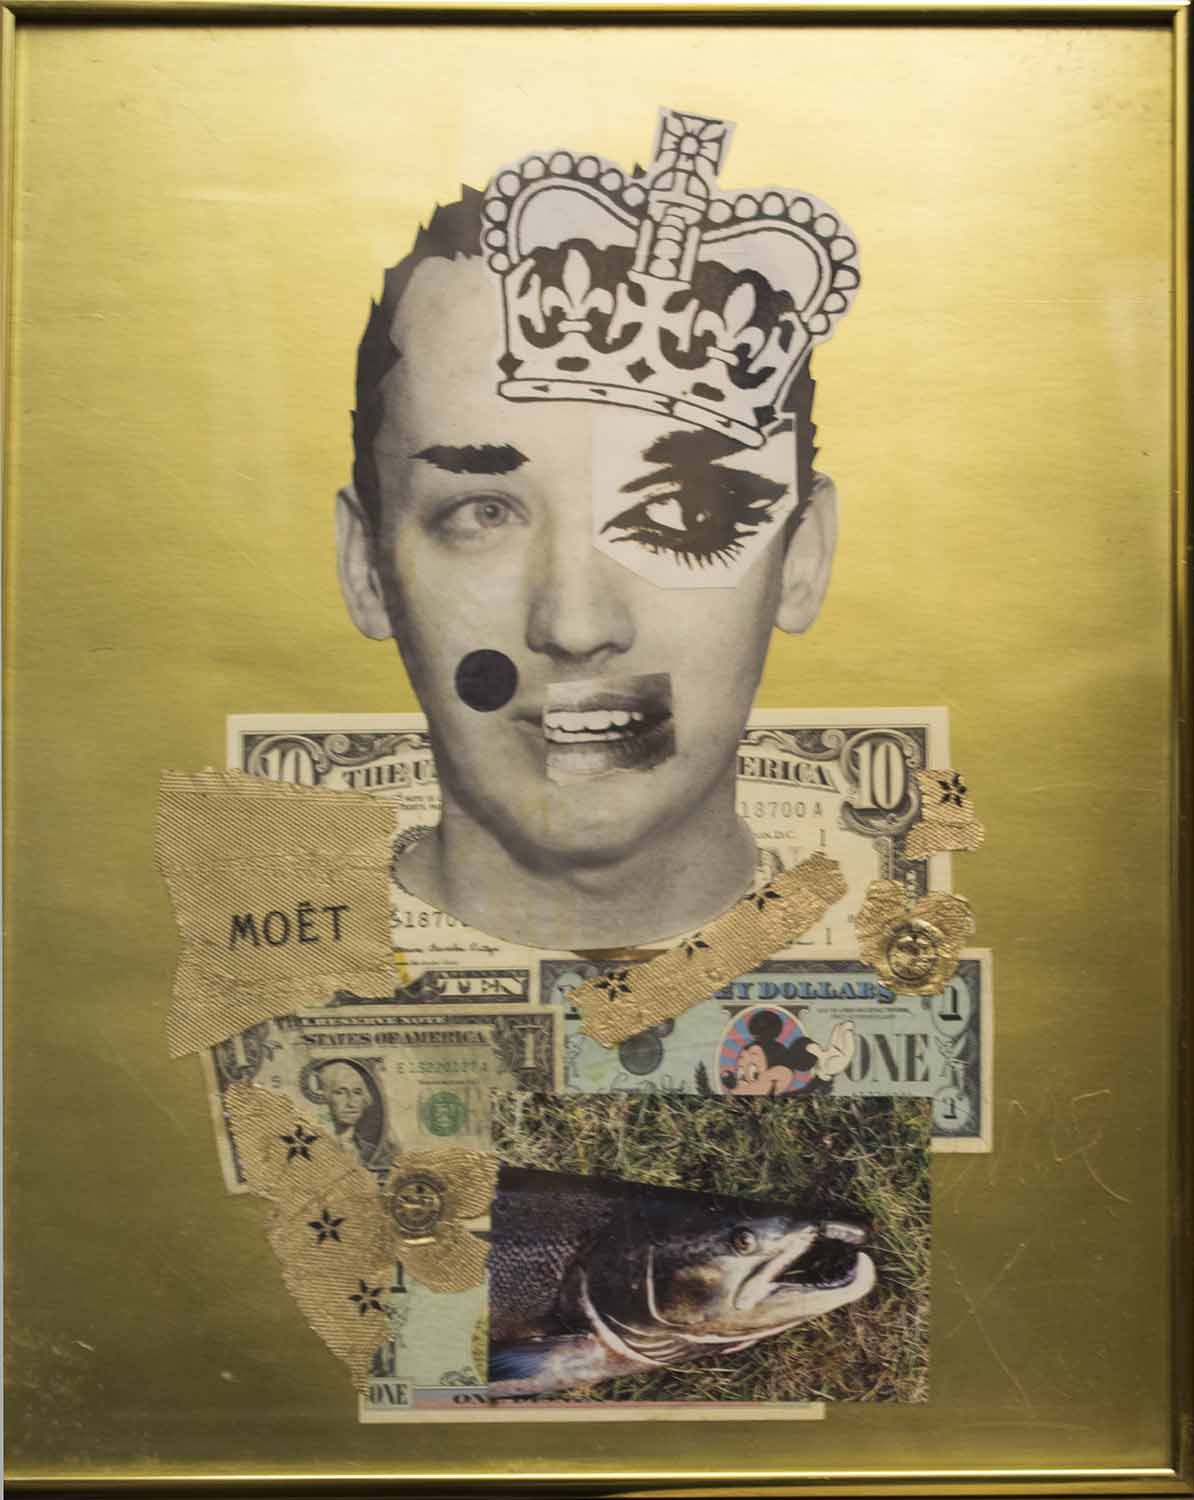 BOY GEORGE, collage on golden cardboard background, 52cm x 42cm overall, framed and glazed.